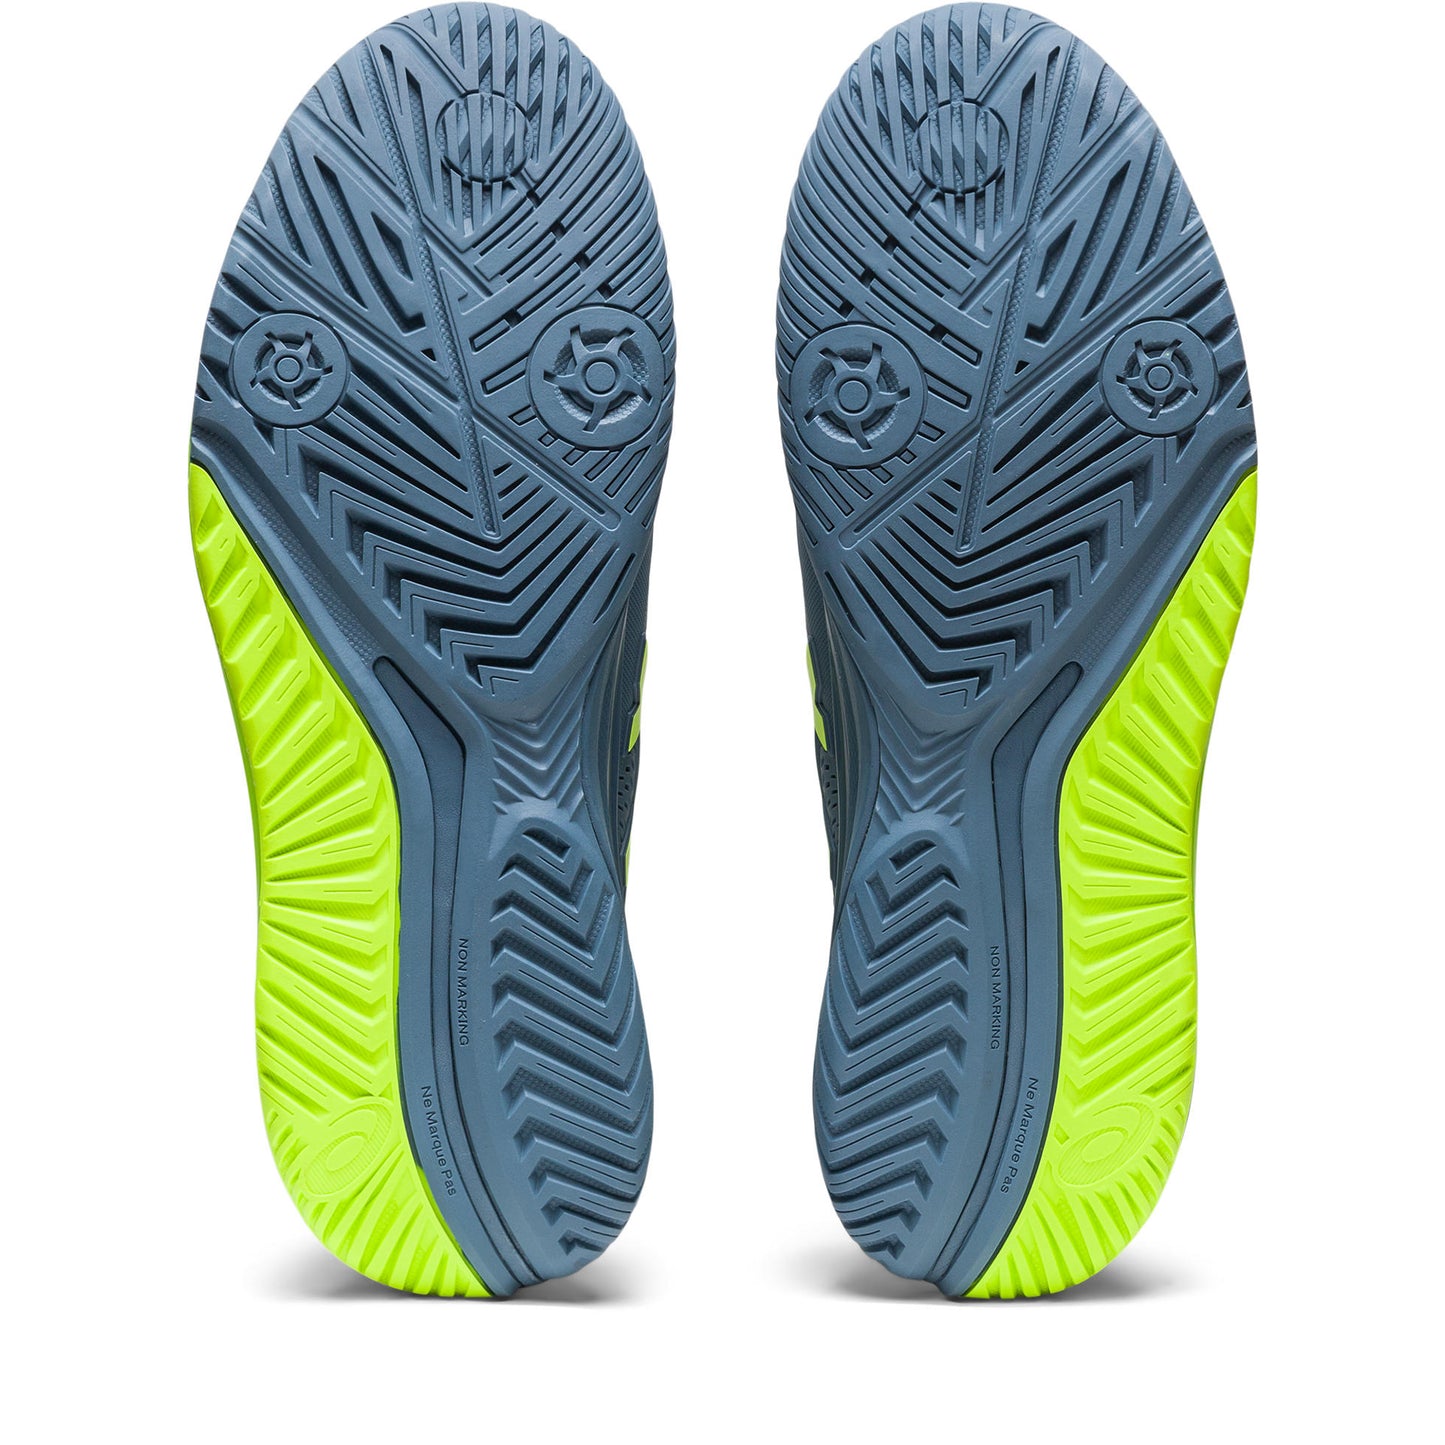 Asics Gel Resolution 9 Men tennis shoes 330.400 Steel Blue/Green